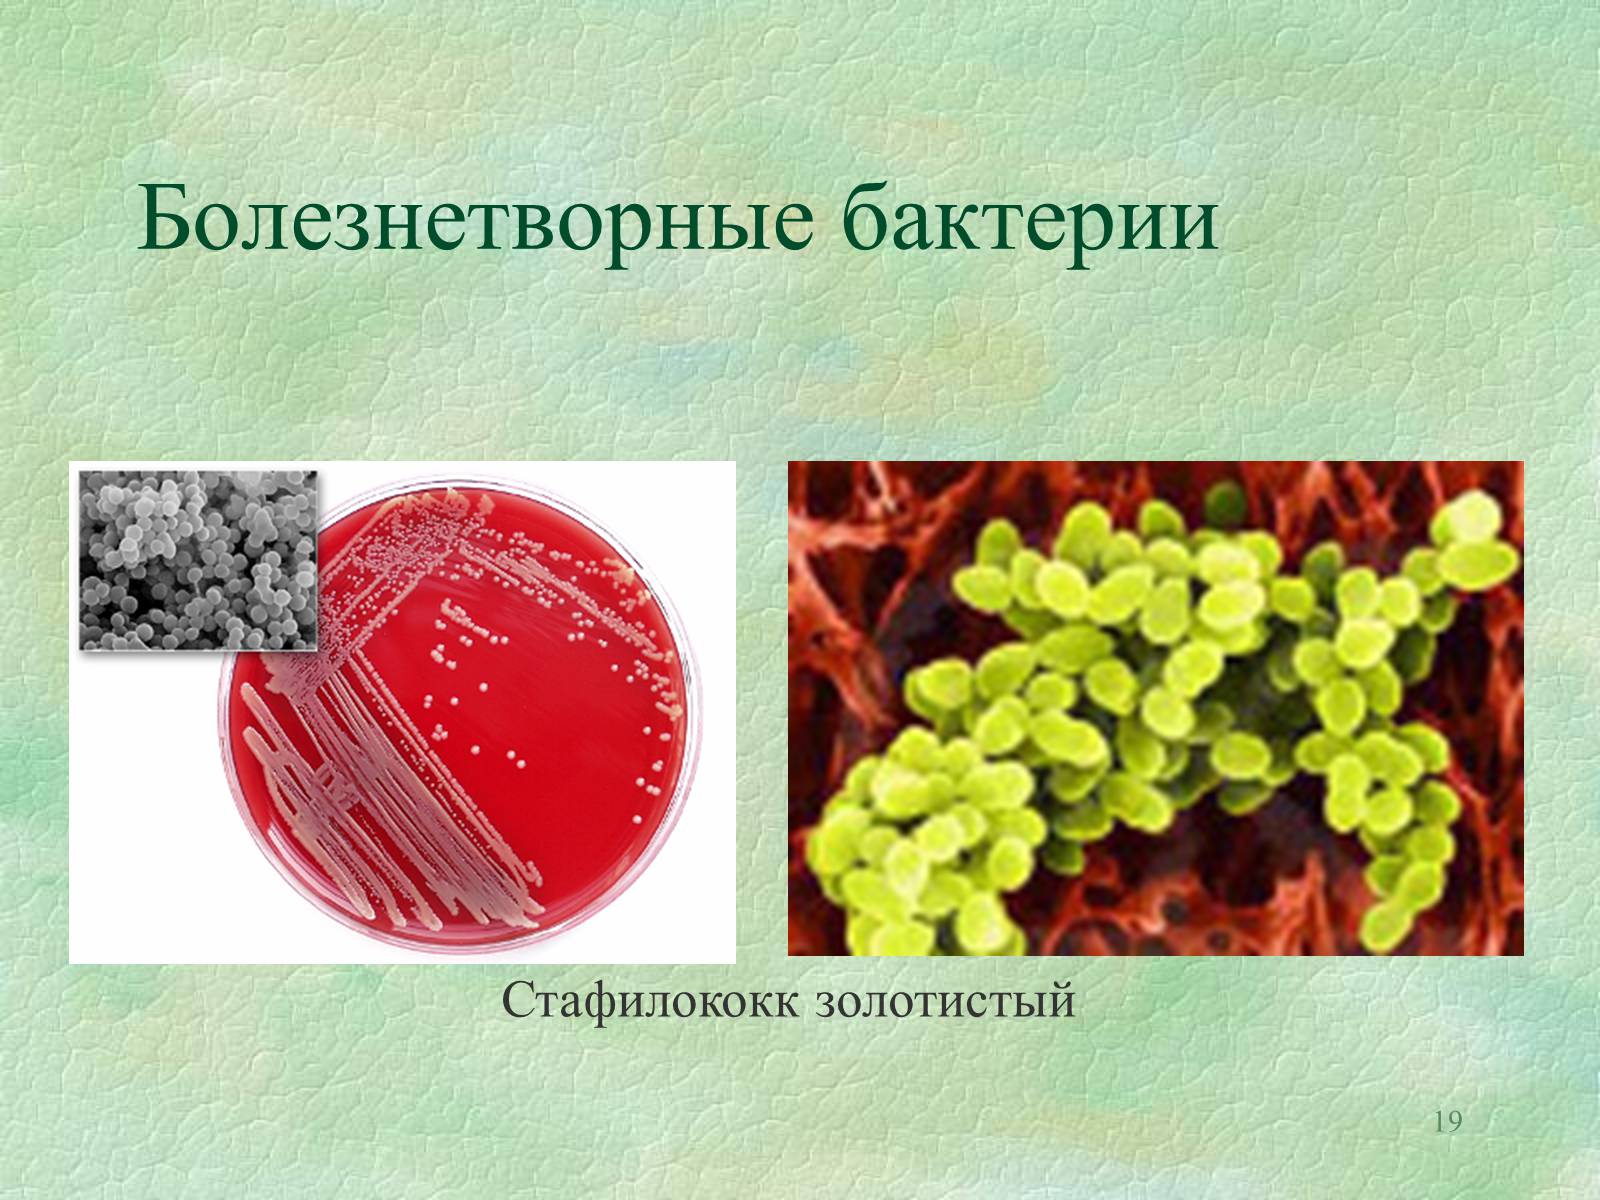 Презентація на тему «Значение бактерий в природе и жизни человека» - Слайд #19